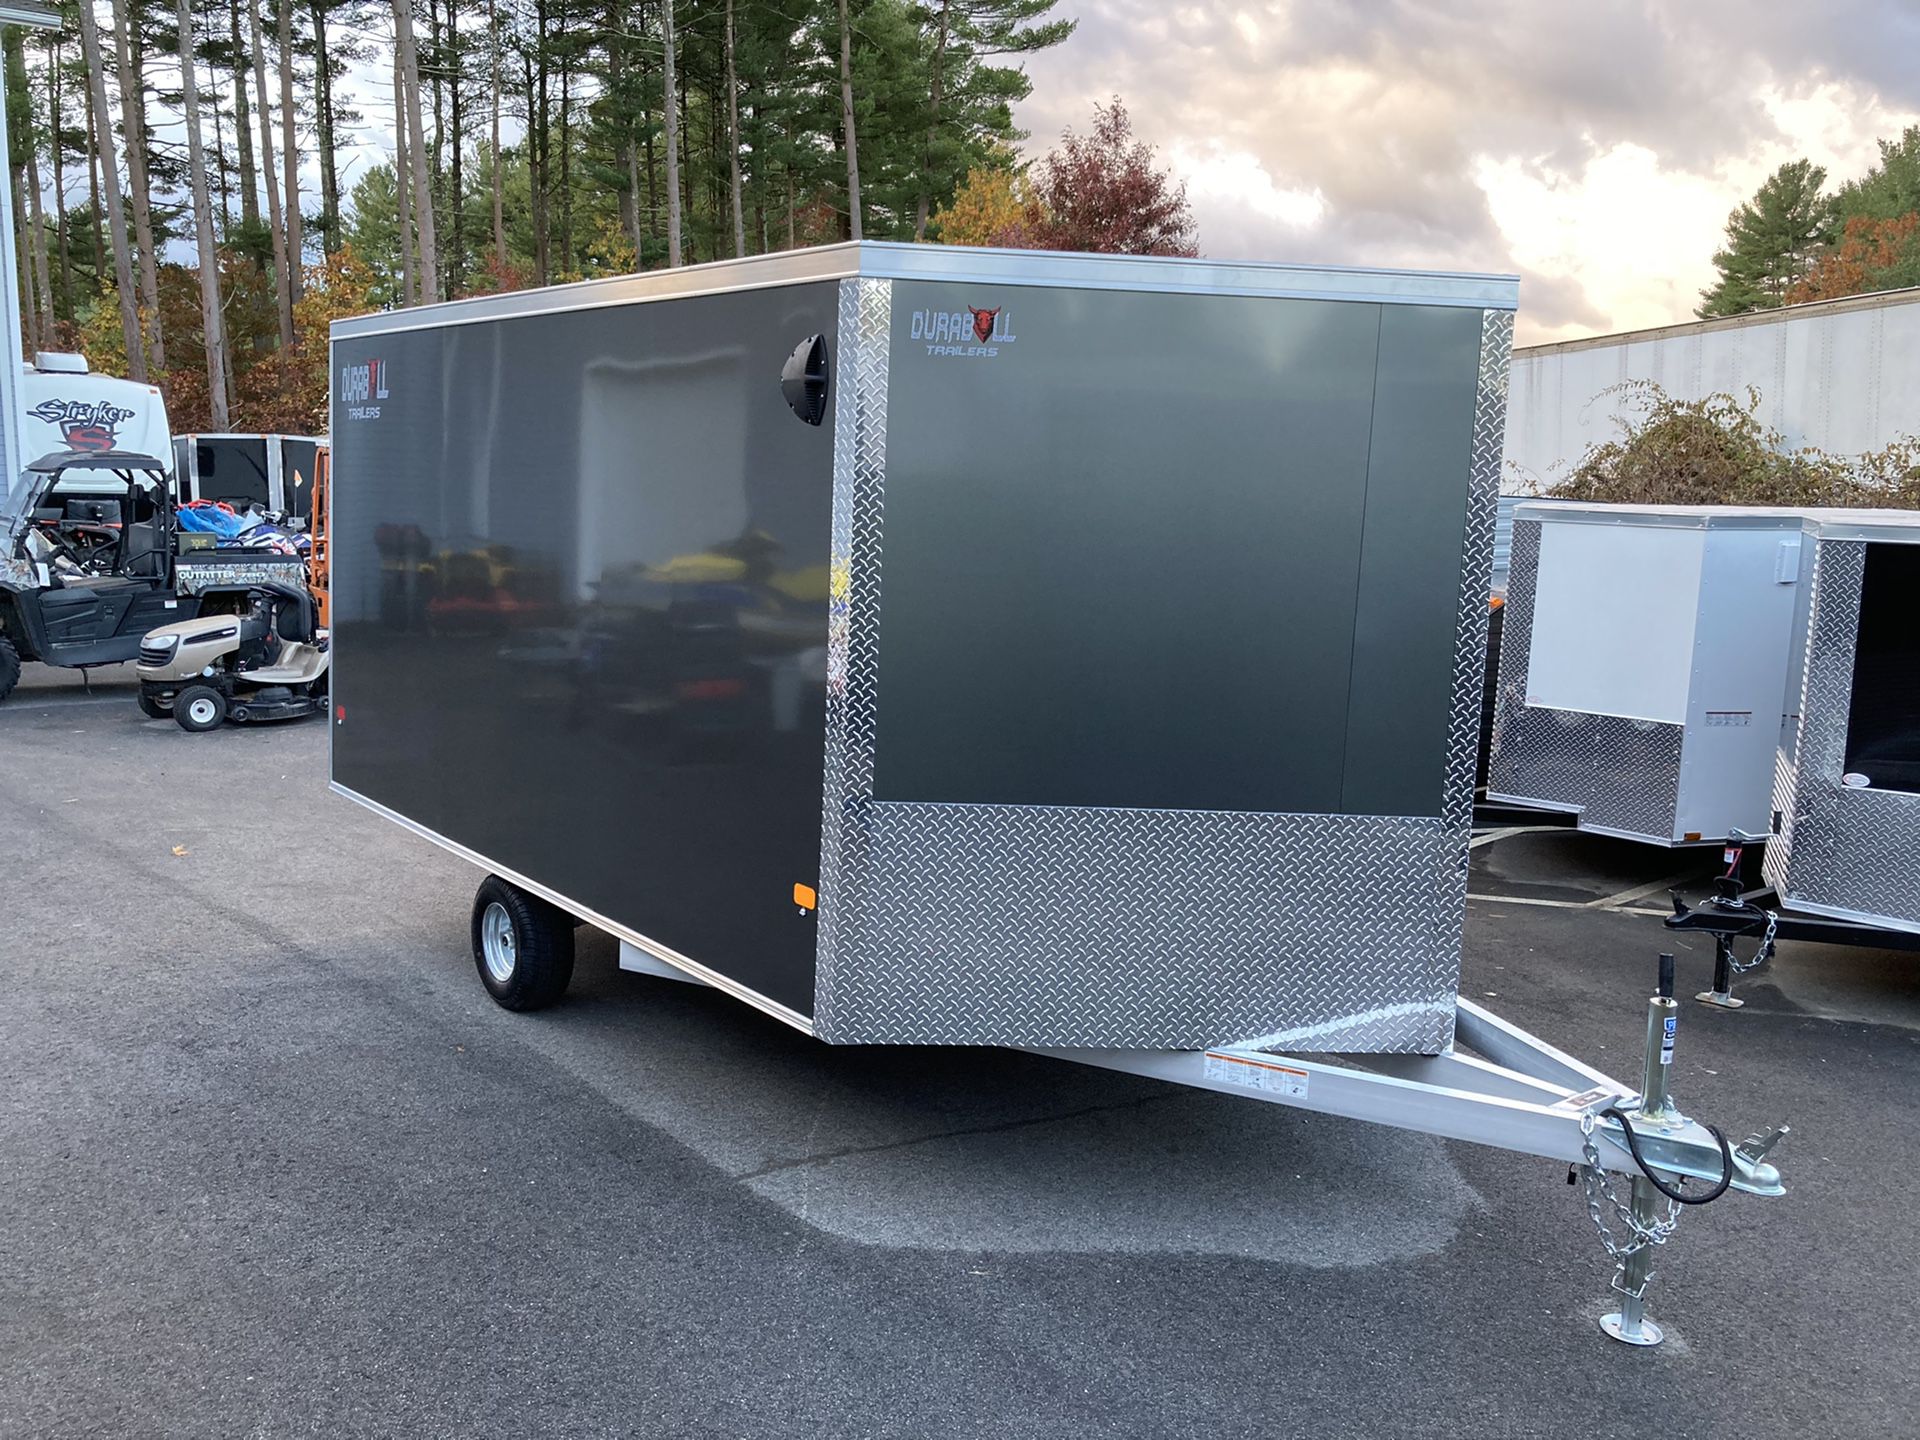 2021 DuraBull 12x101 enclosed all aluminum trailer will trade